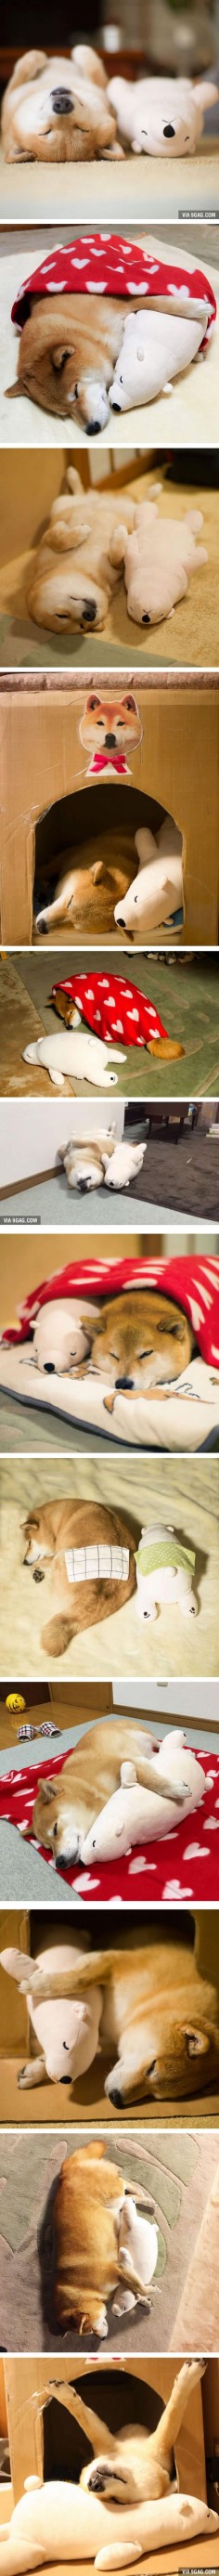 Shiba Inu Maru Loves To Sleep With His Little Stuffed Polar Bear Toy